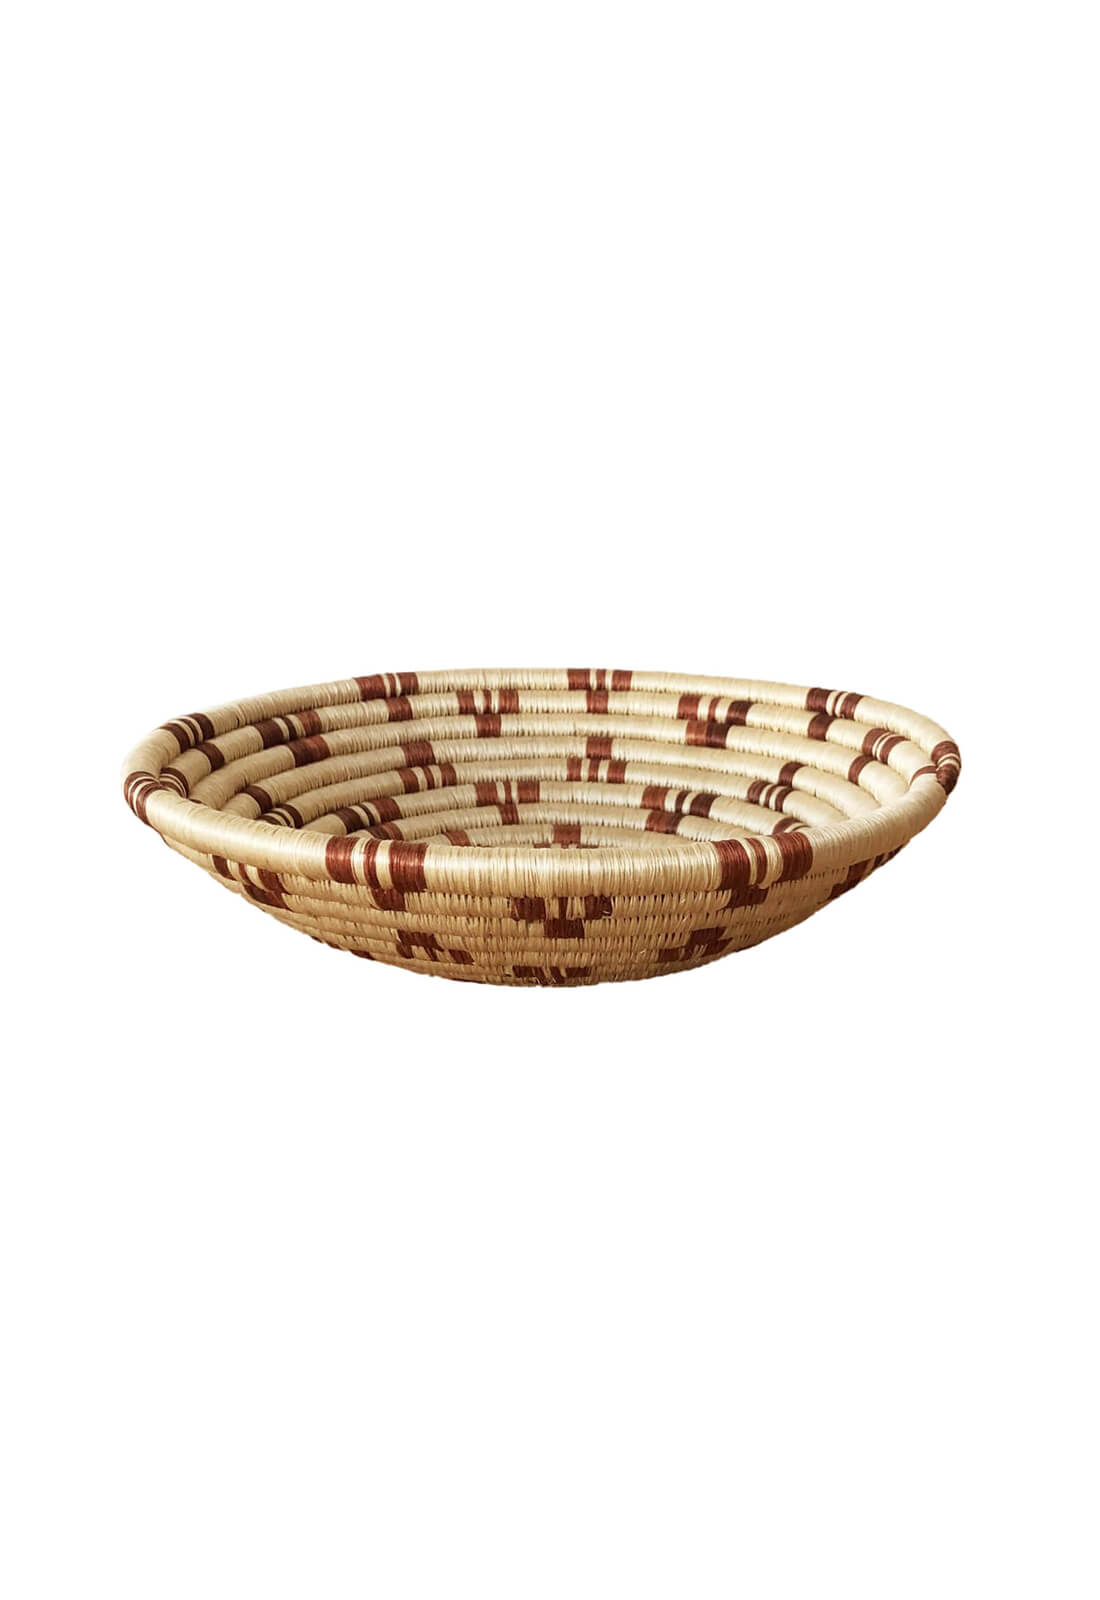 Hand Woven Cyarwa Basket - Tan, Brick, and Rust, Small